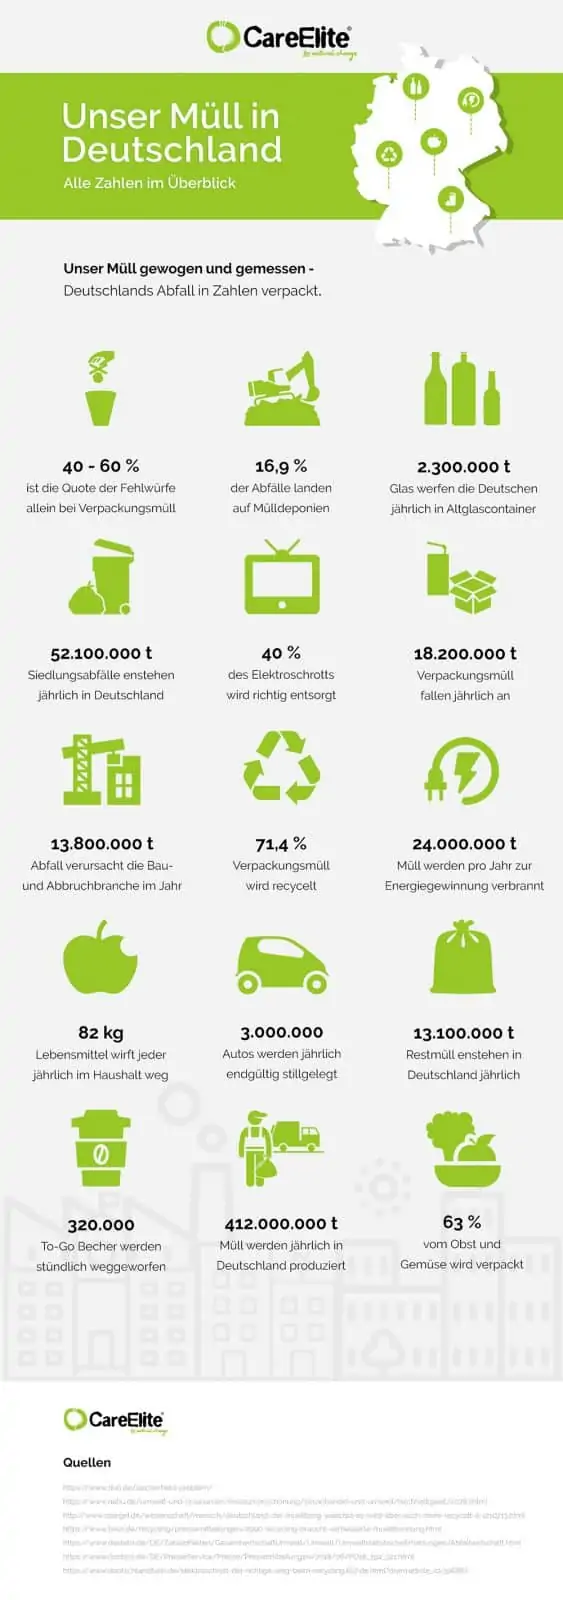 Waste separation - Statistics Germany garbage